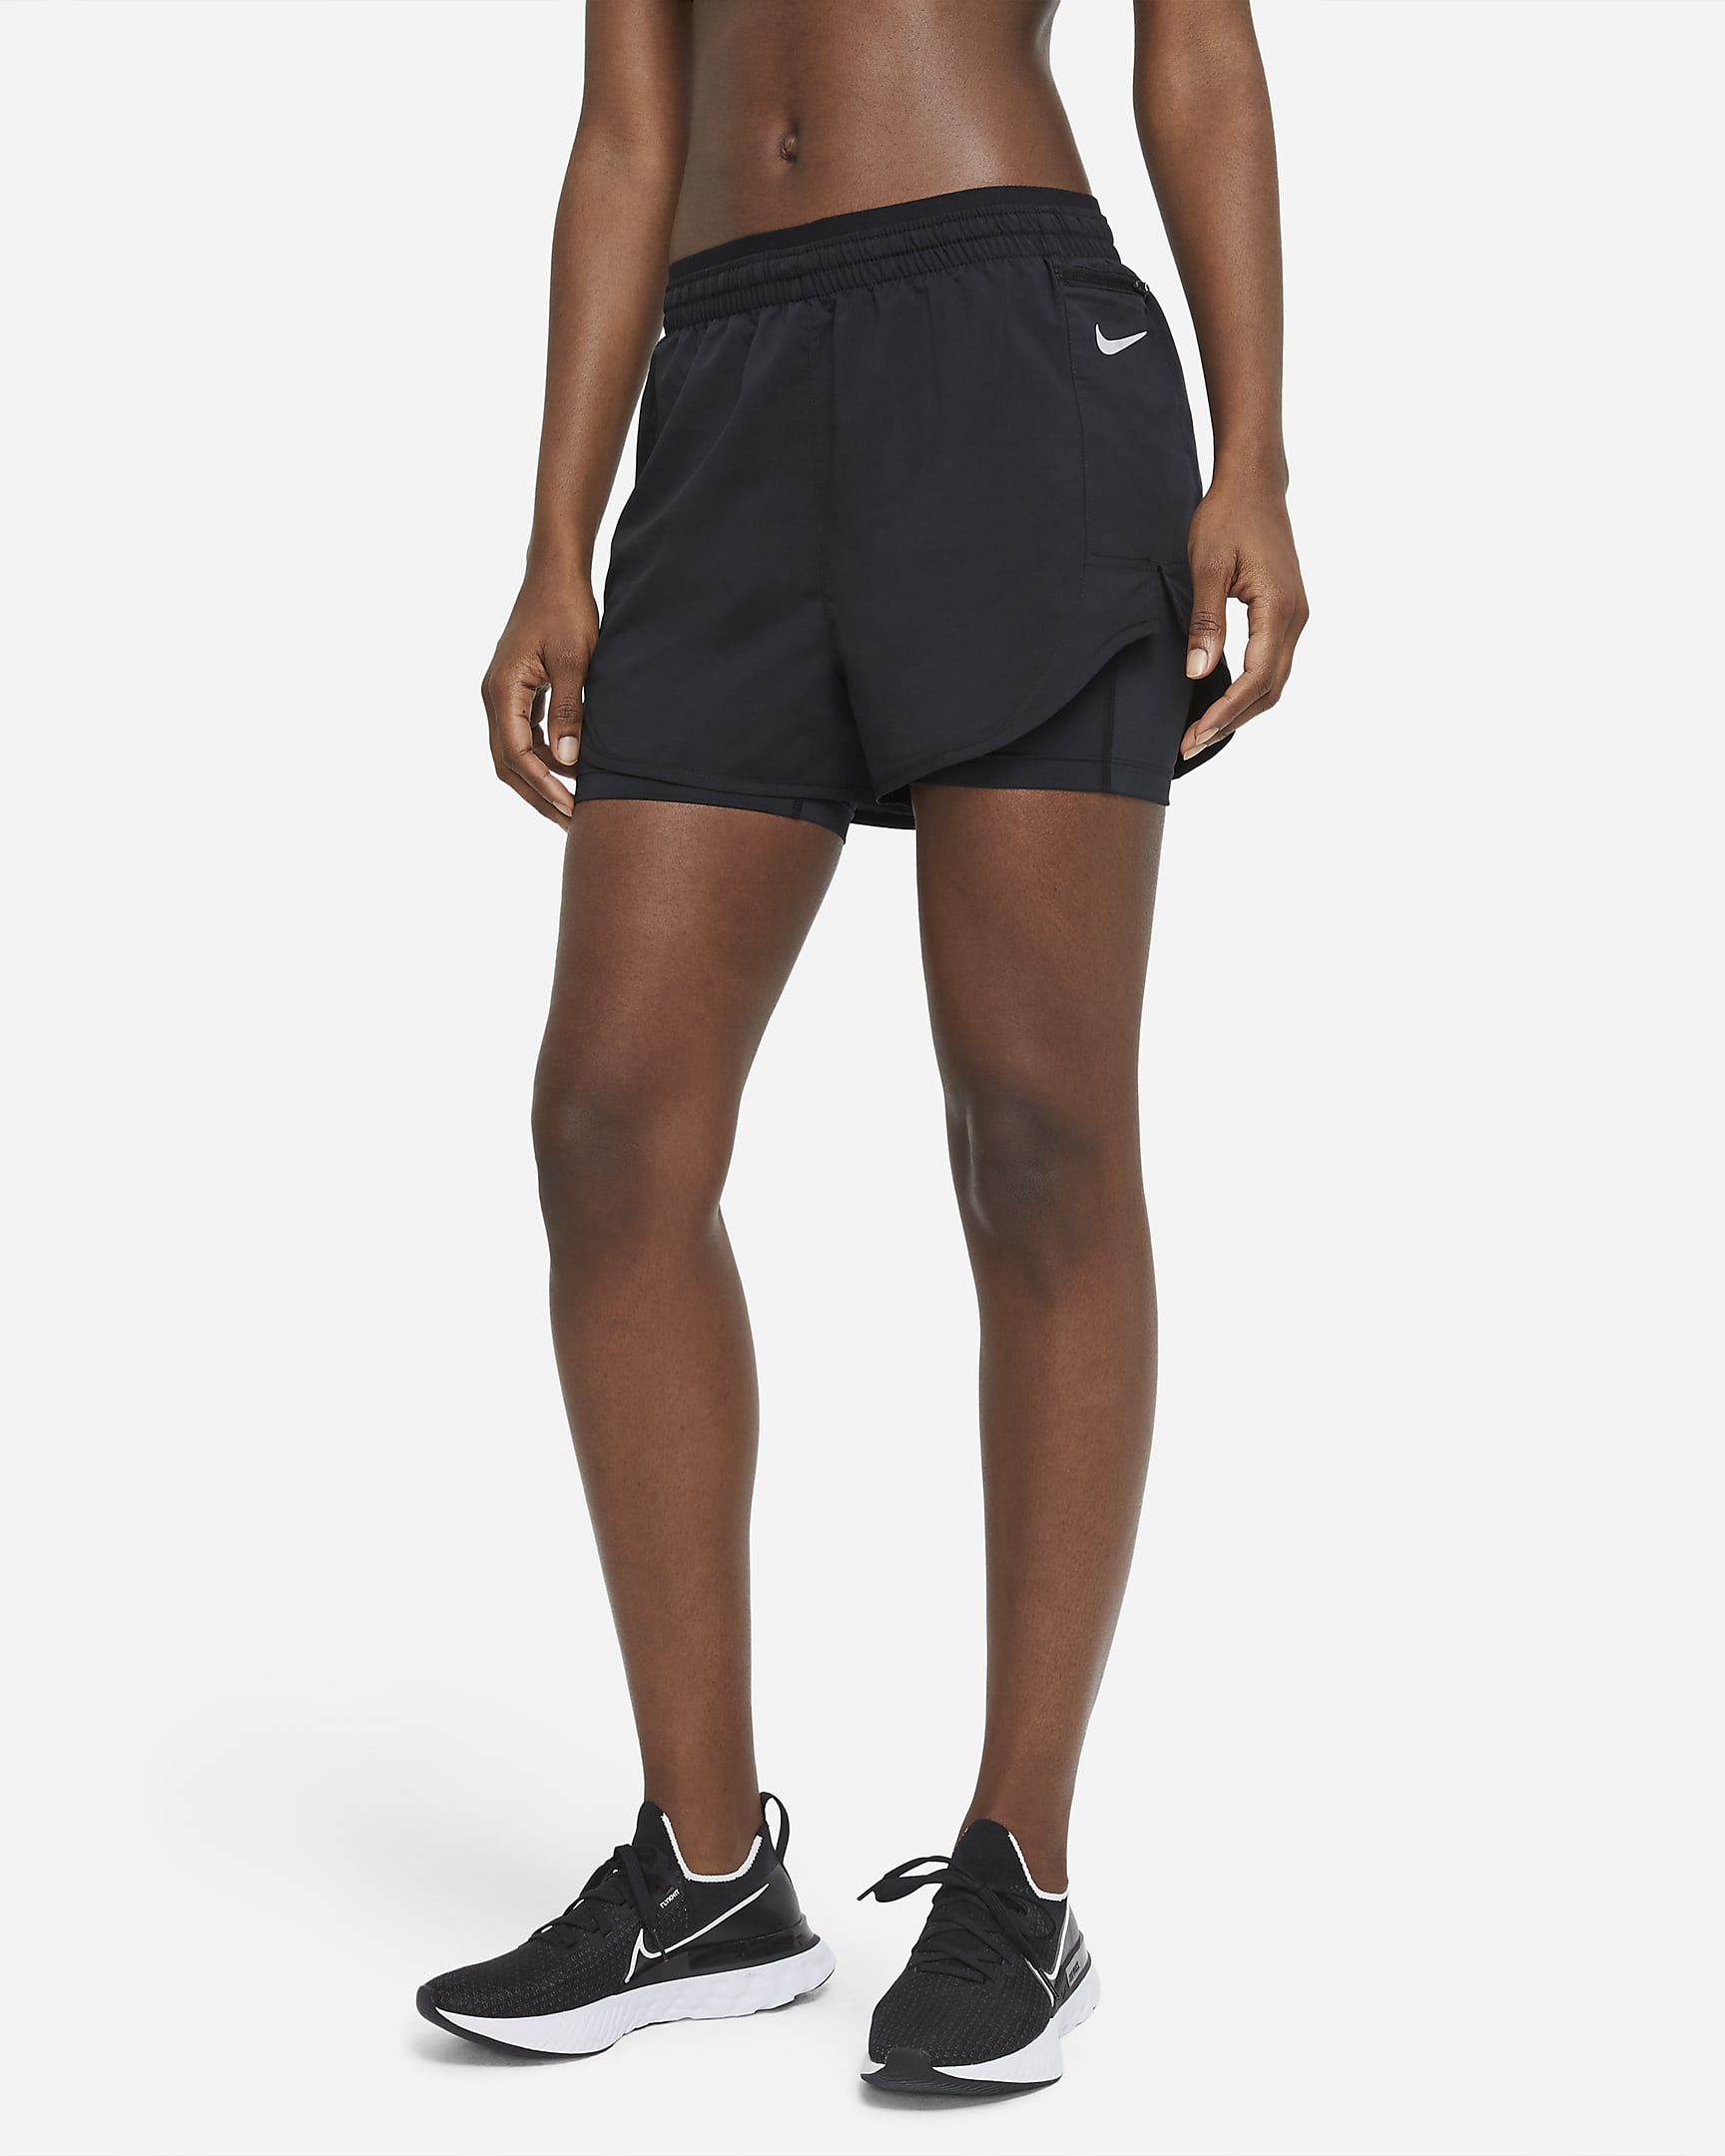 Nike Tempo Luxe Women's 2-In-1 Running Shorts. Nike BG